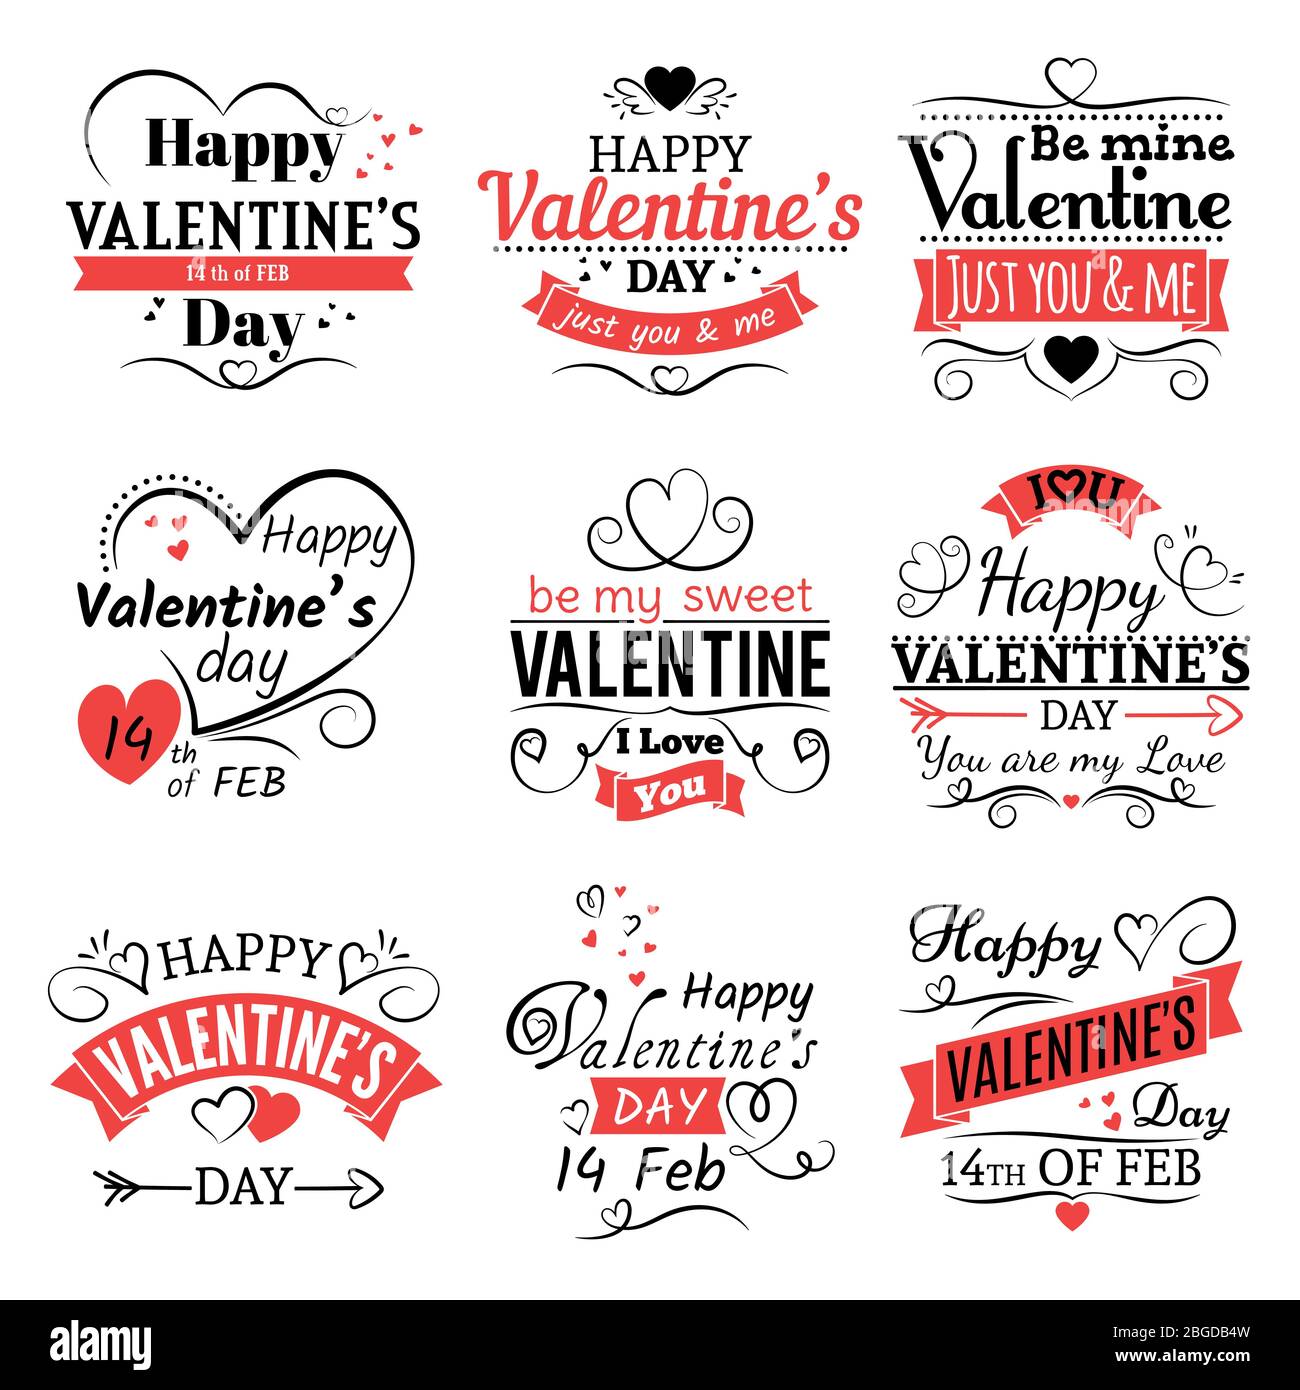 Retro vintage valentines day greeting card design Vector Image